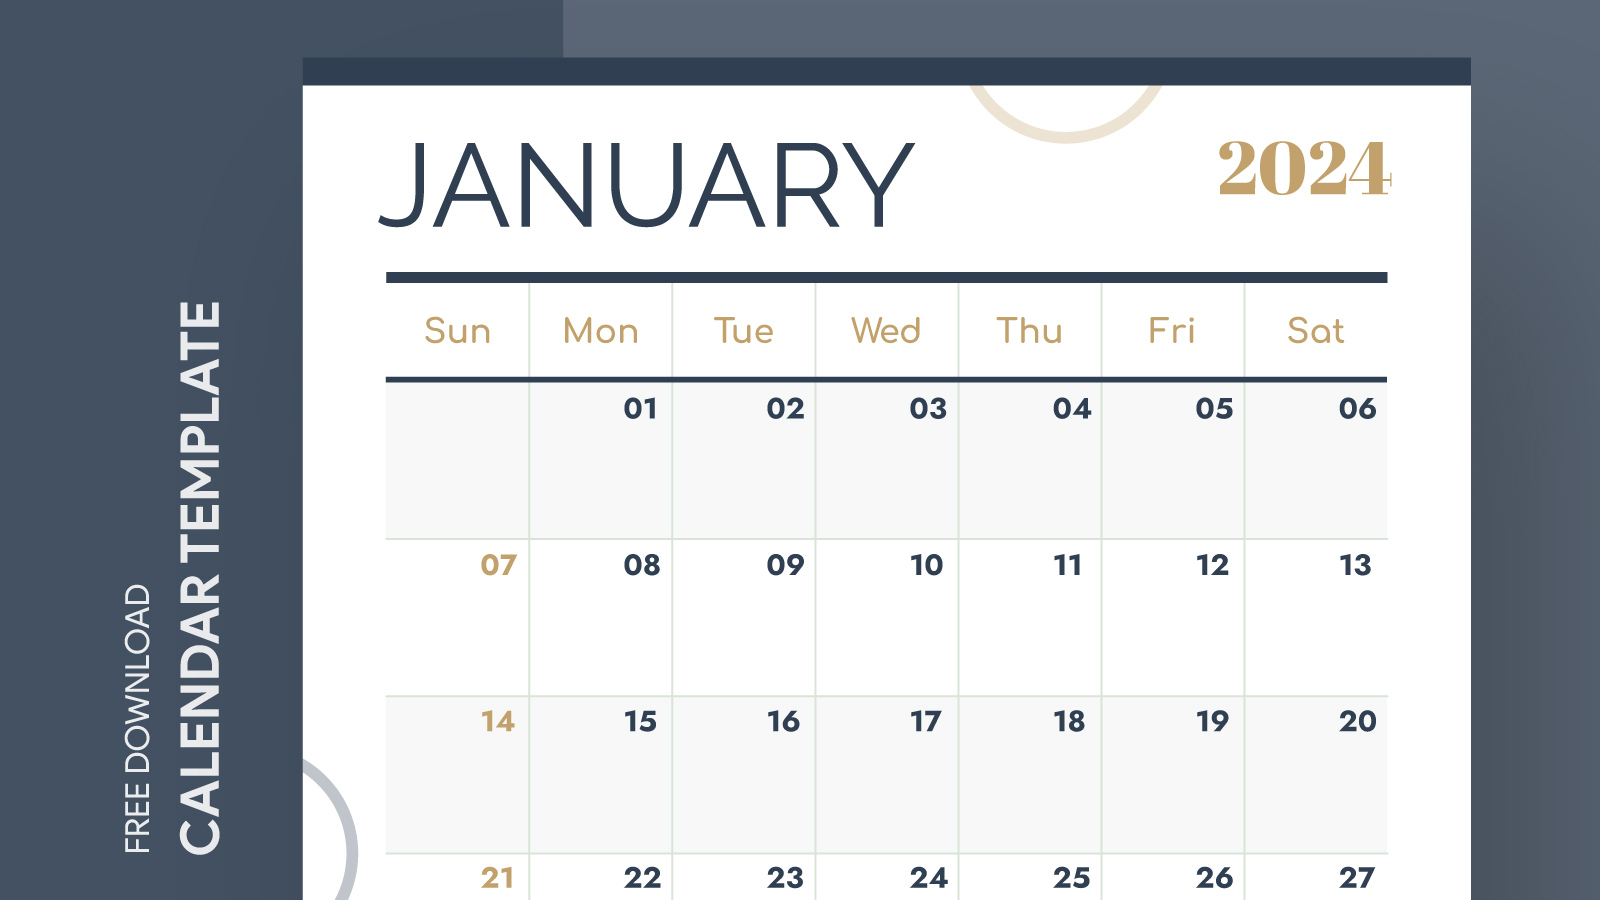 January 2024 Calendar Free Google Docs Template - Gdoc.io | 2024 Annual Calendar Google Sheets